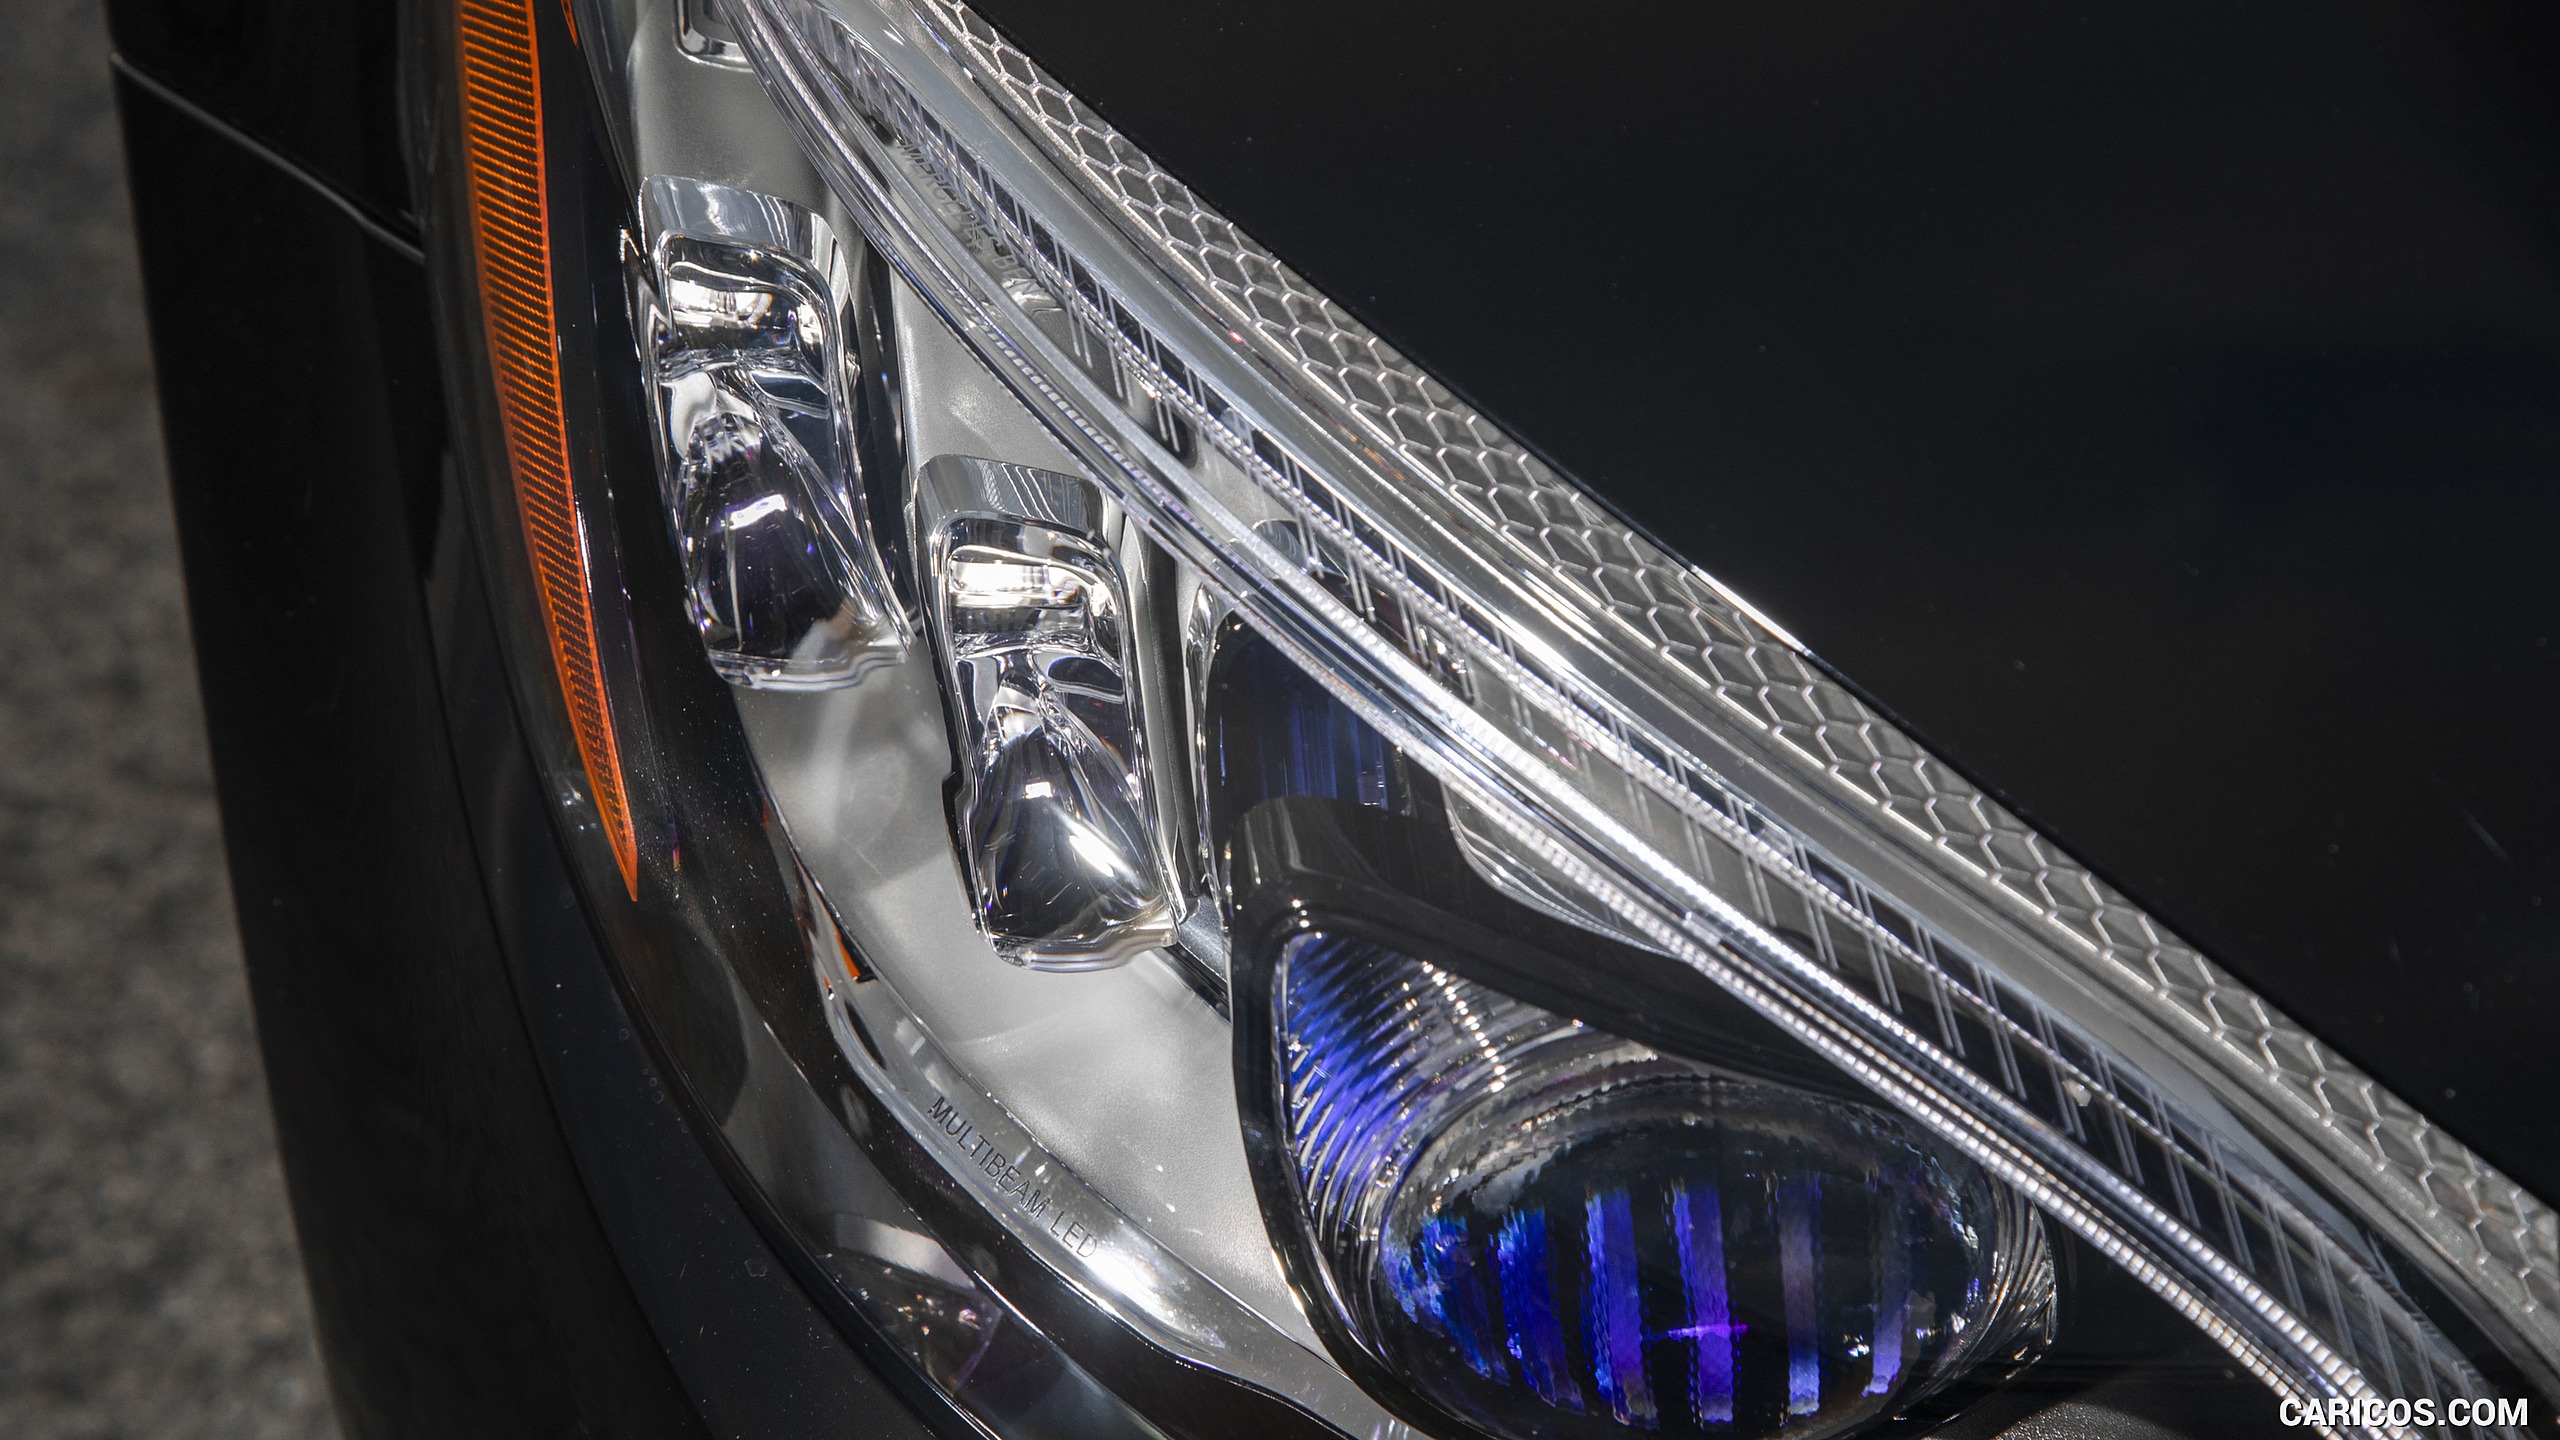 2019 Mercedes-AMG C43 Coupe (US-Spec) - Headlight, #155 of 184